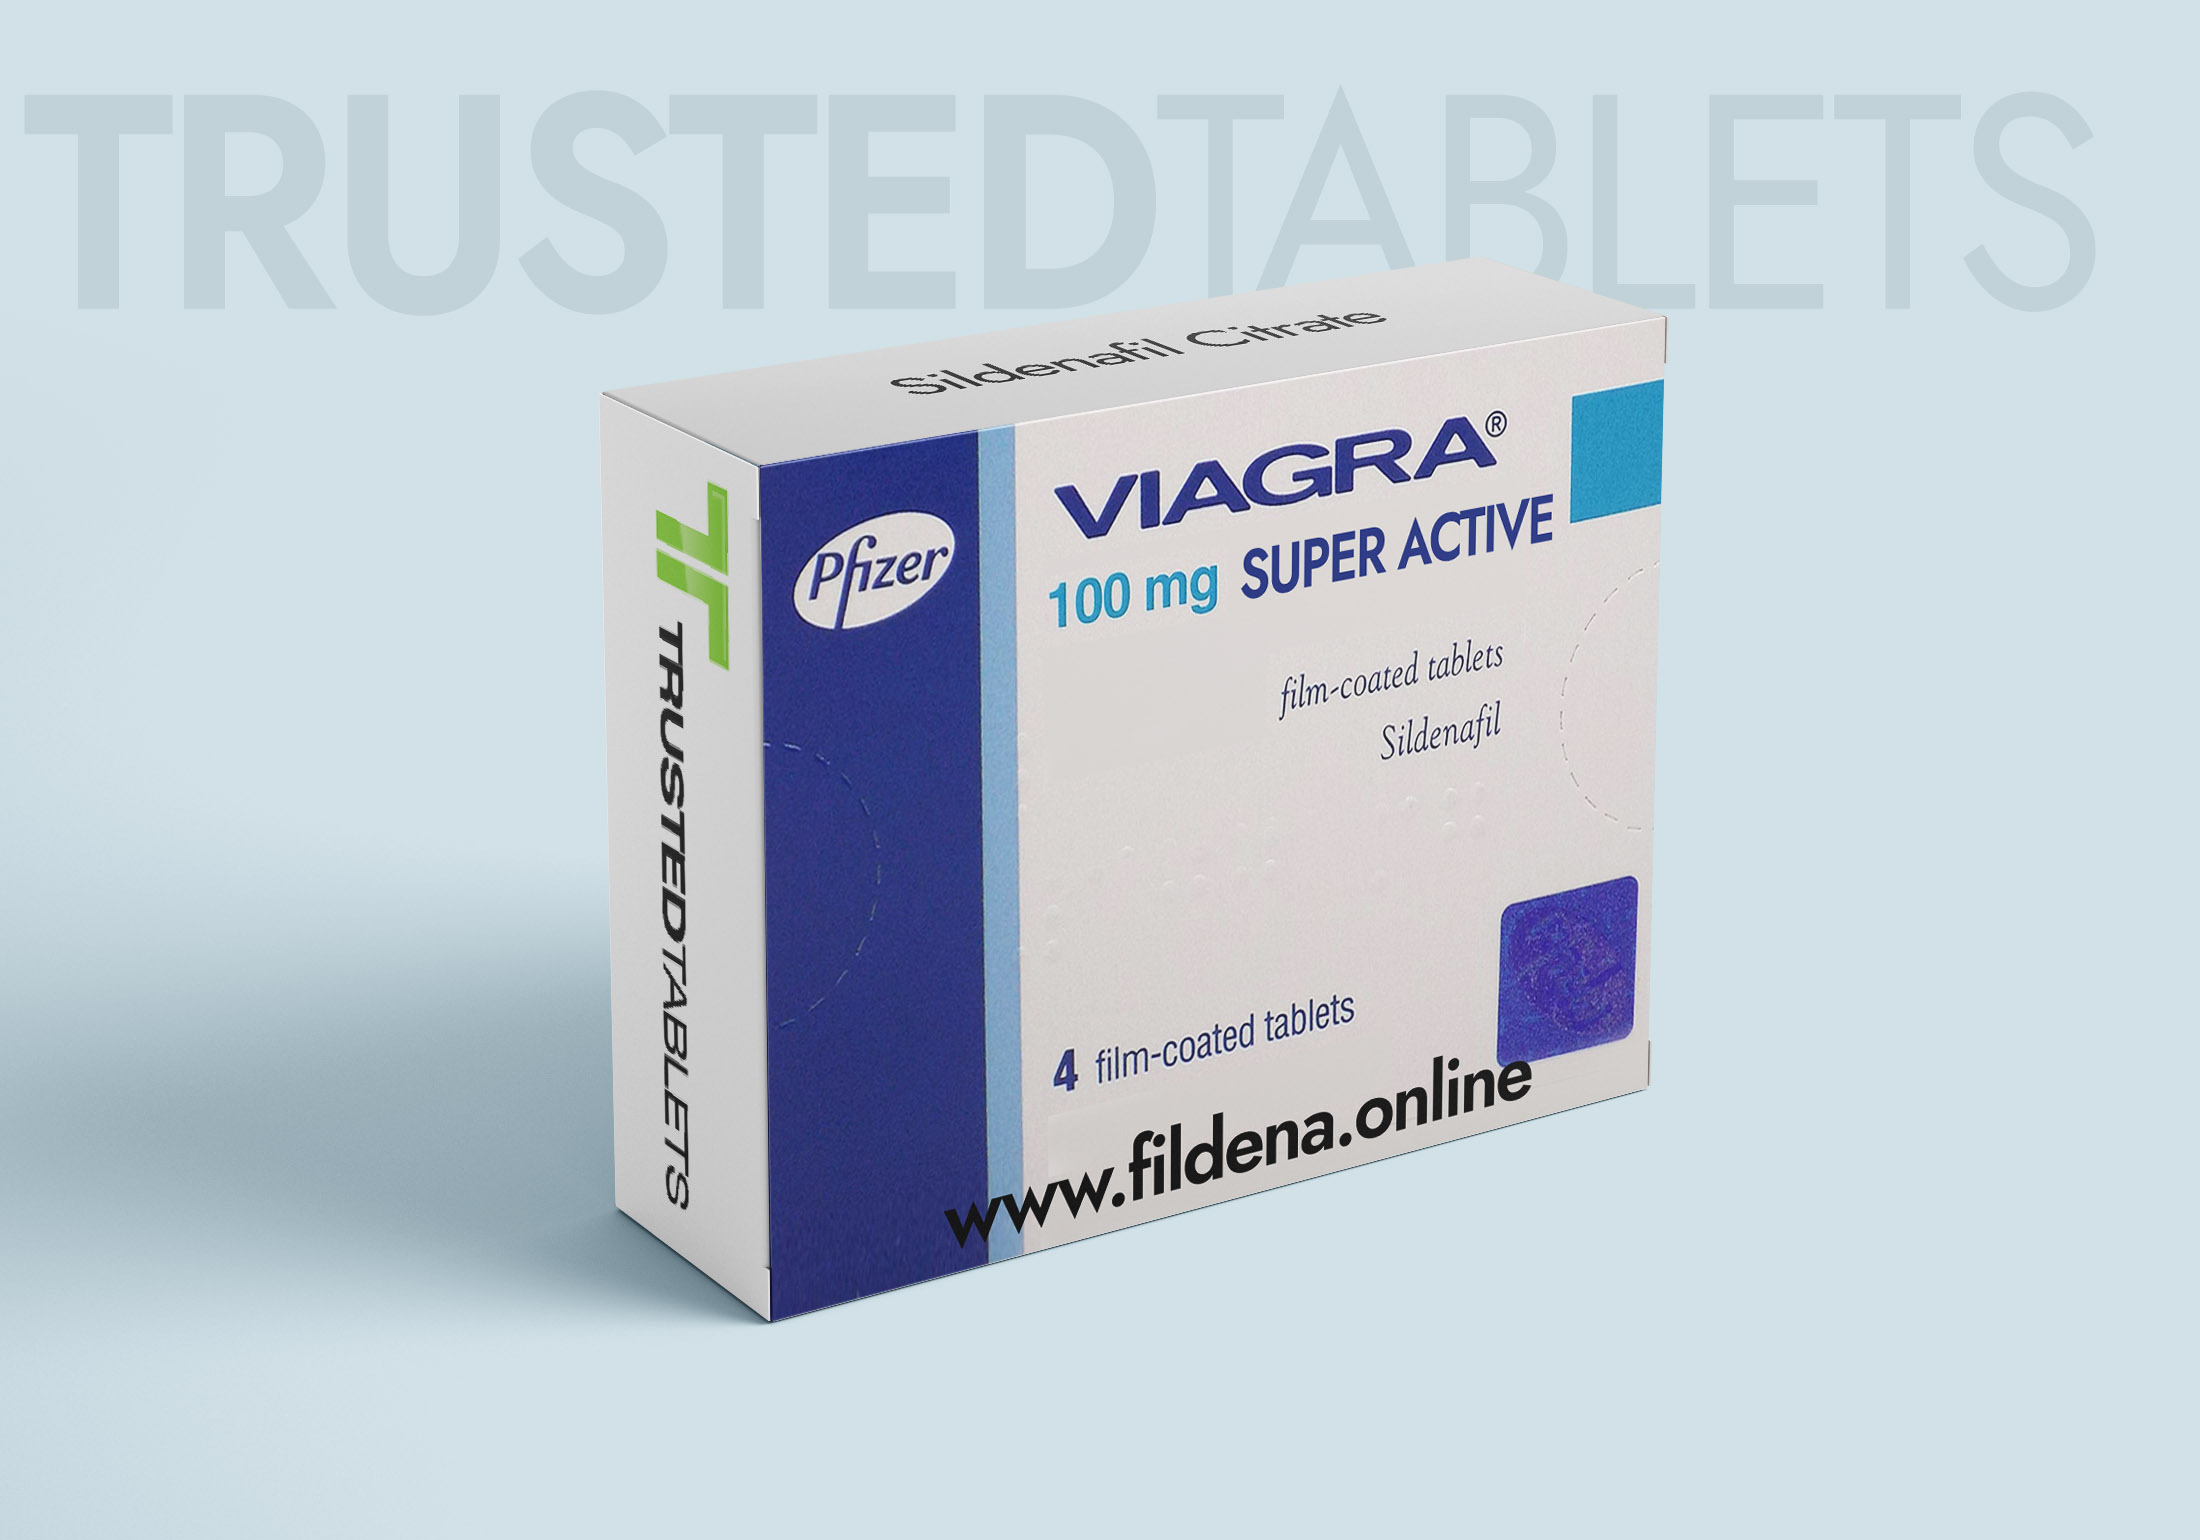 Viagra Super Active TrustedTablets